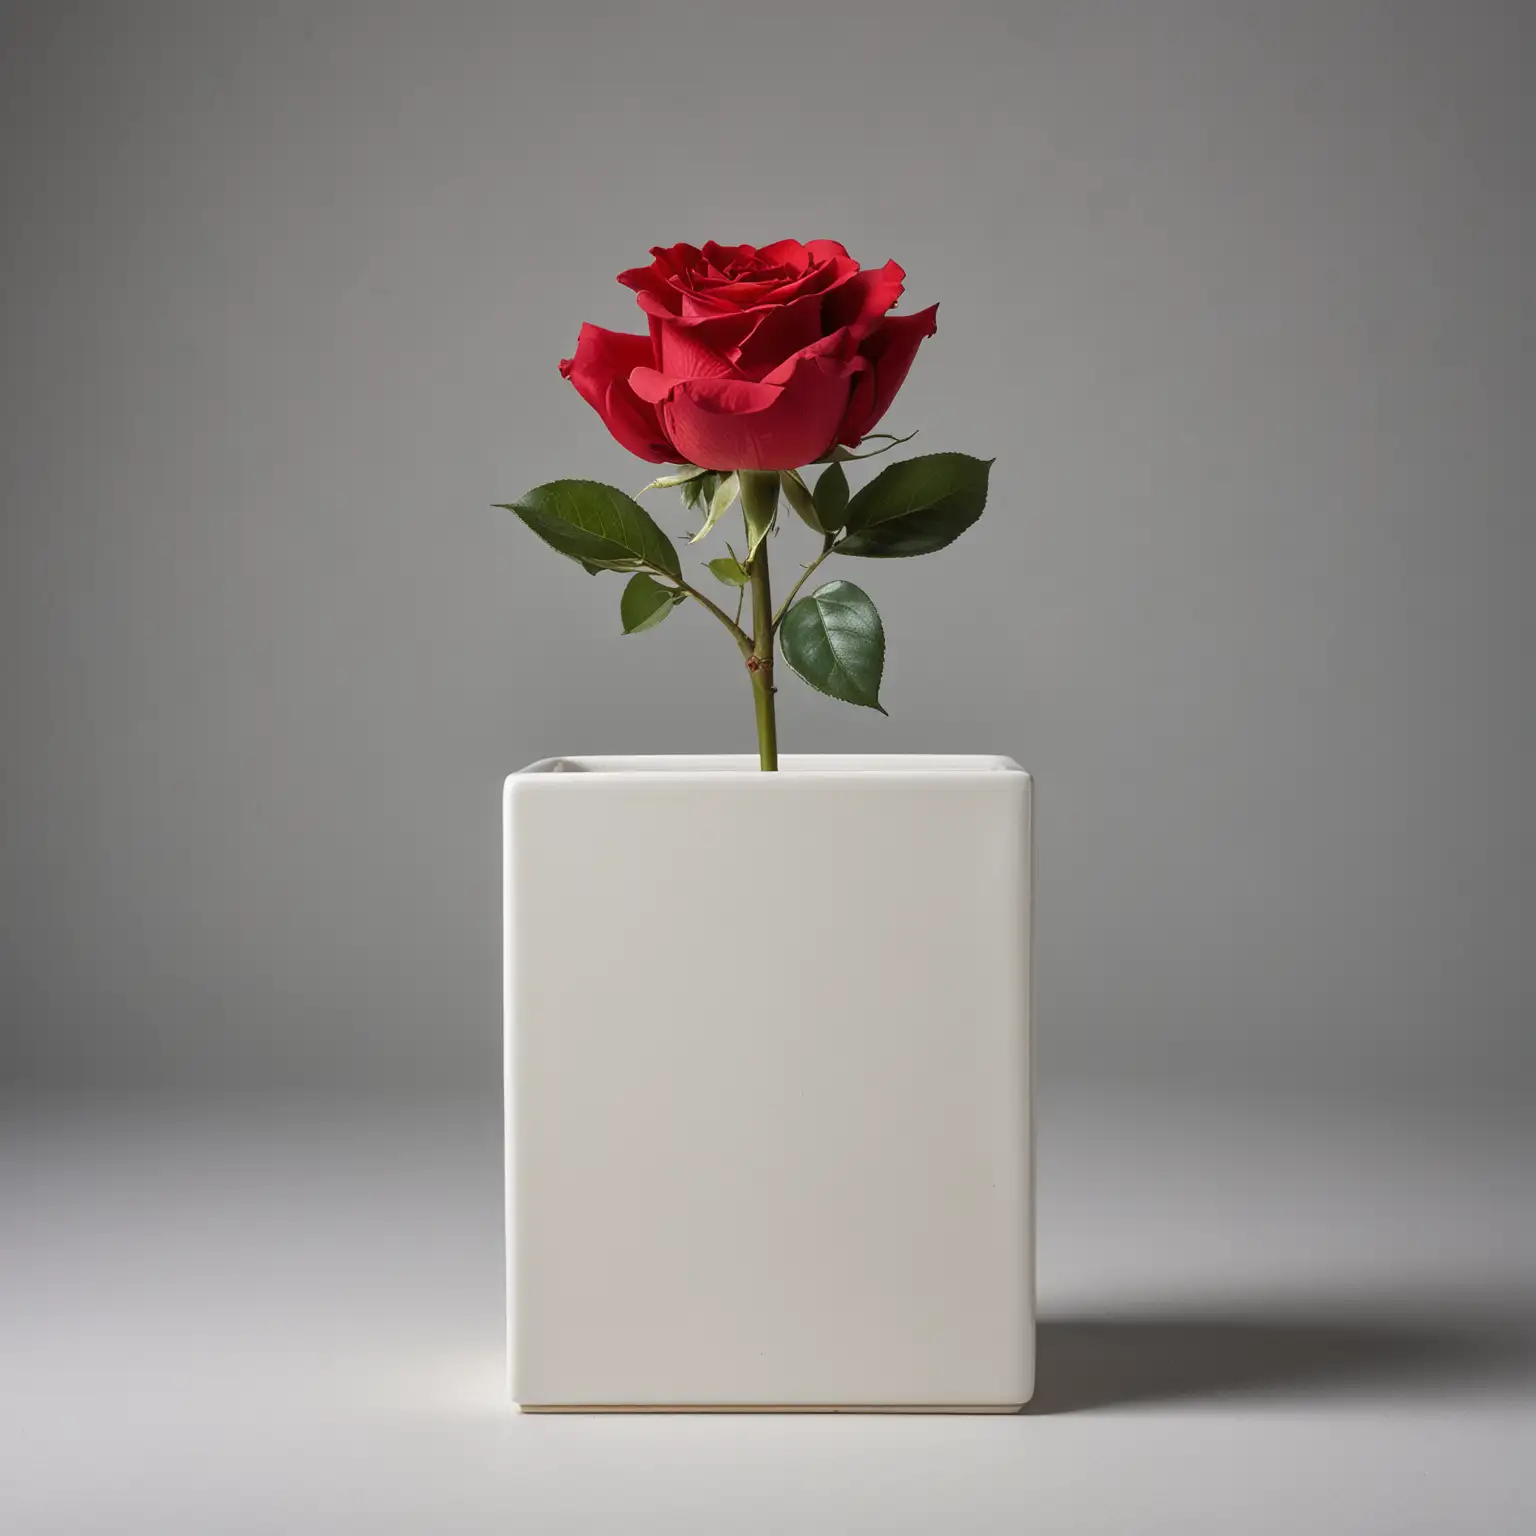 Minimalist-Red-Rose-Blossom-in-White-Square-Vase